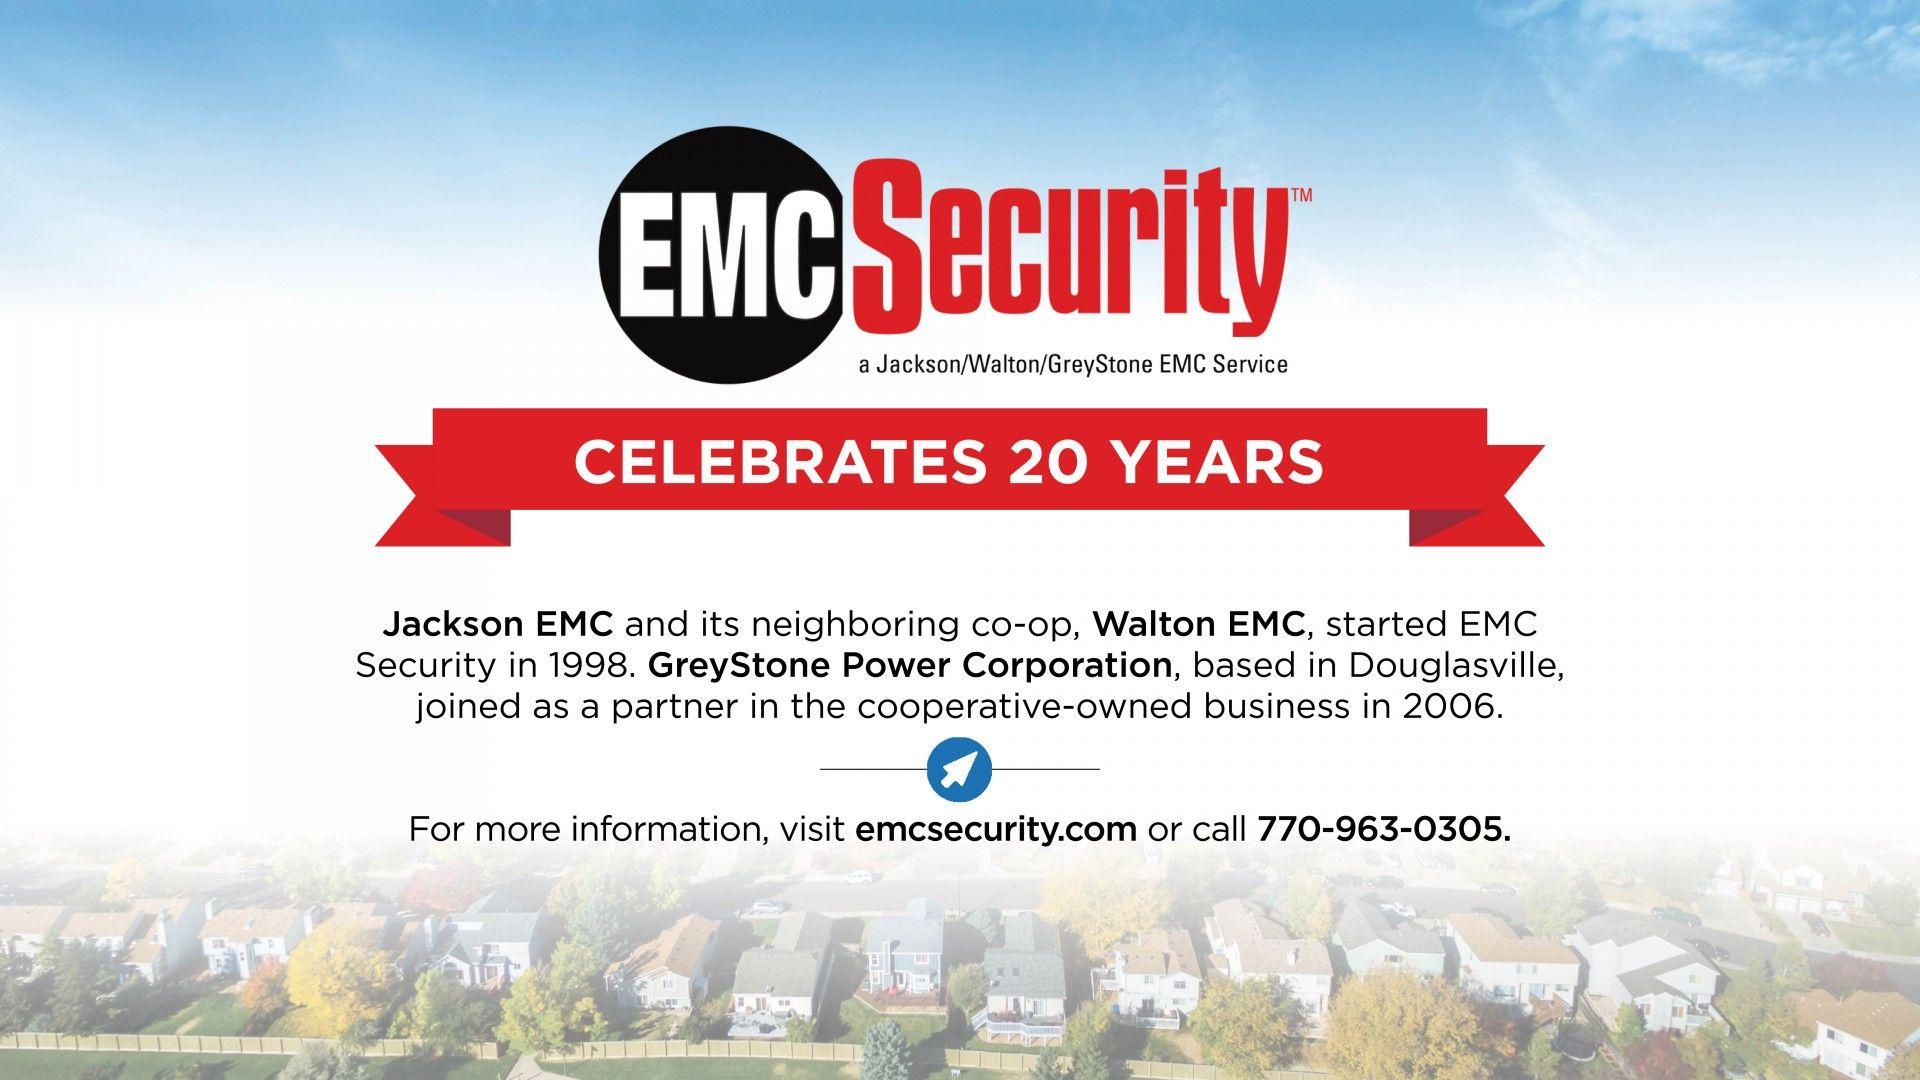 EMC Security Logo - EMC Security Celebrates 20 Years